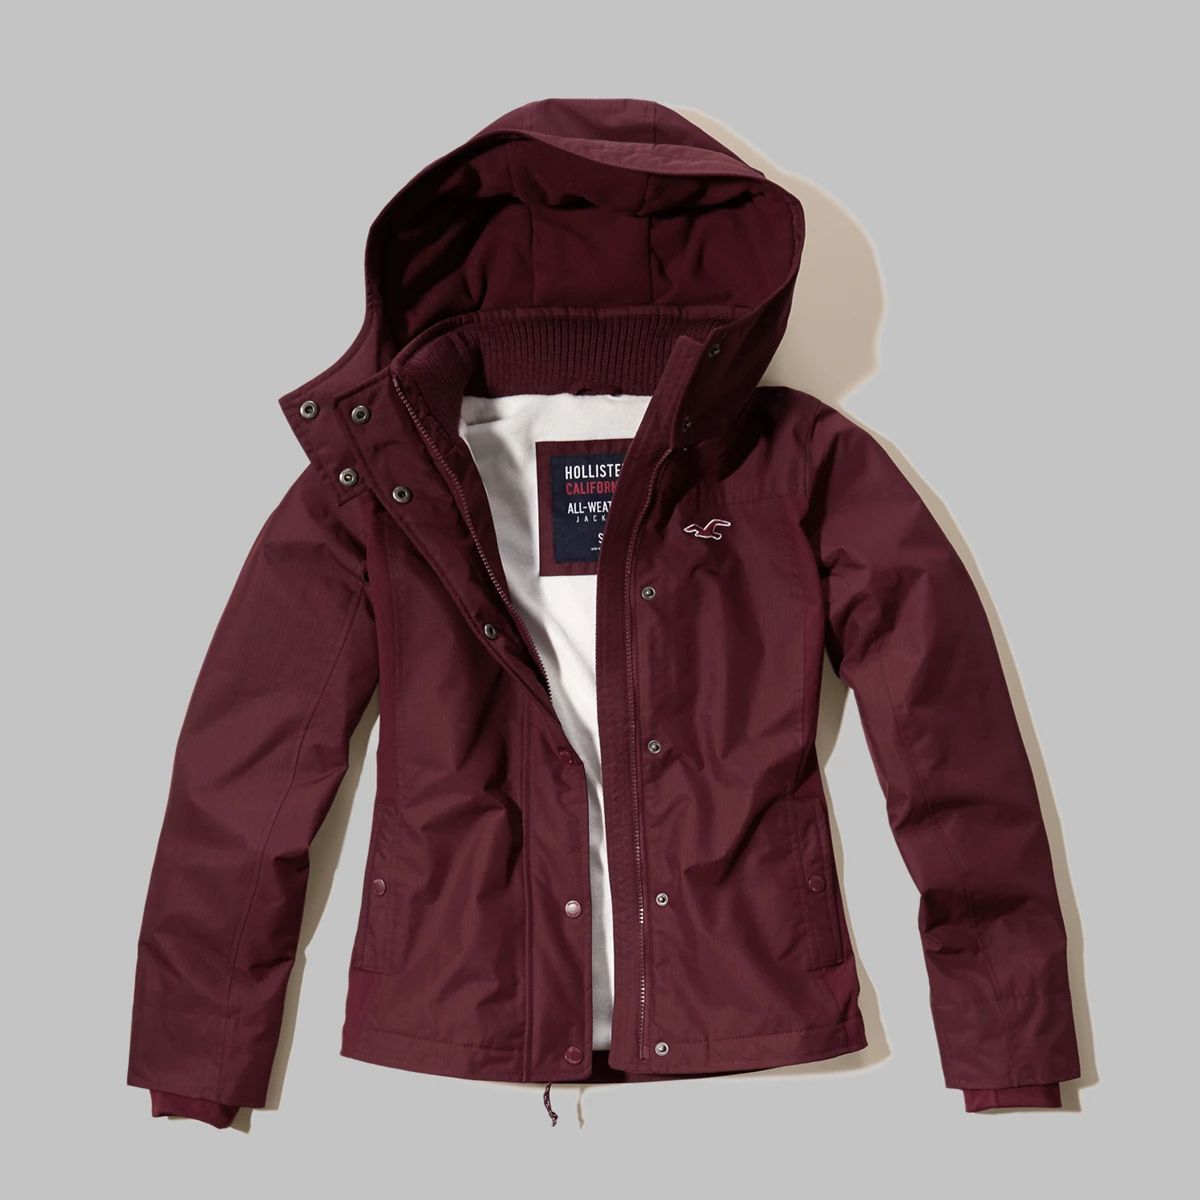 Hollister All-Weather Fleece Lined Jacket | Hollister US